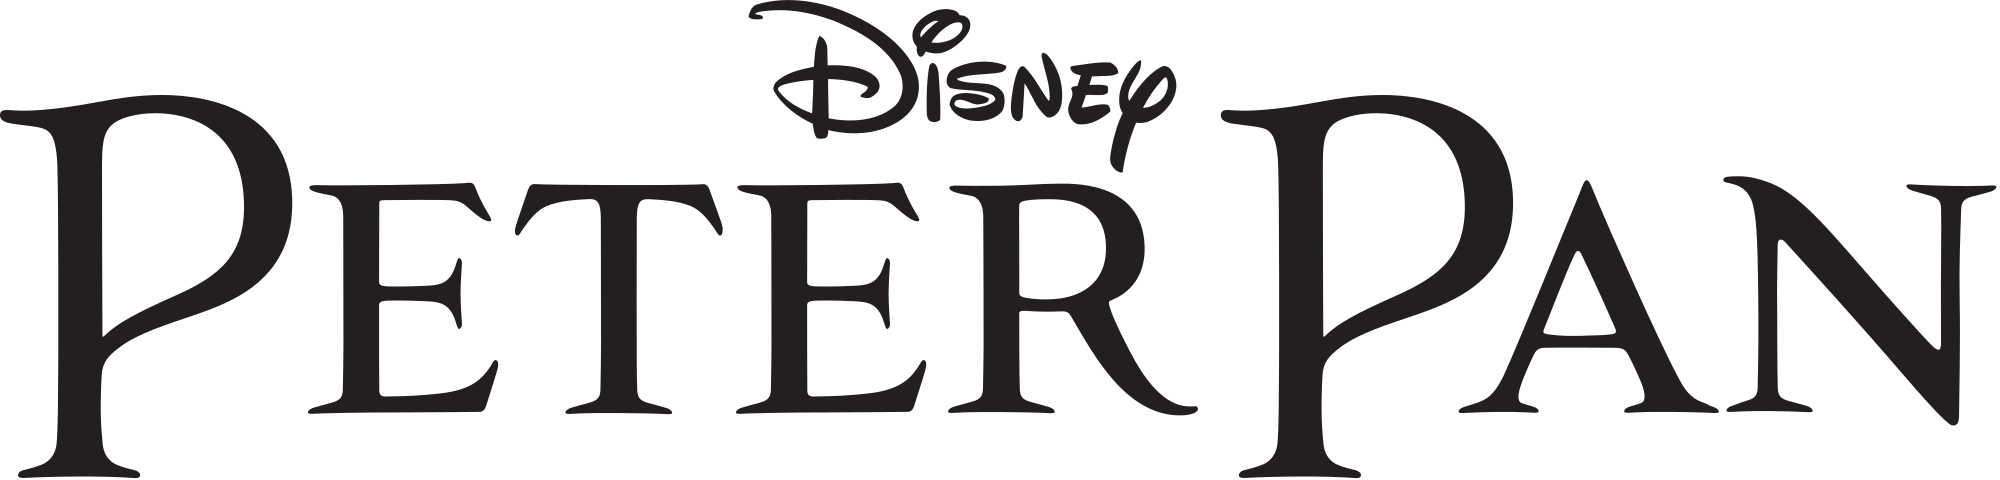 Disney Peter Pan Logo - File:Peter Pan Logo Black.svg - Wikimedia Commons